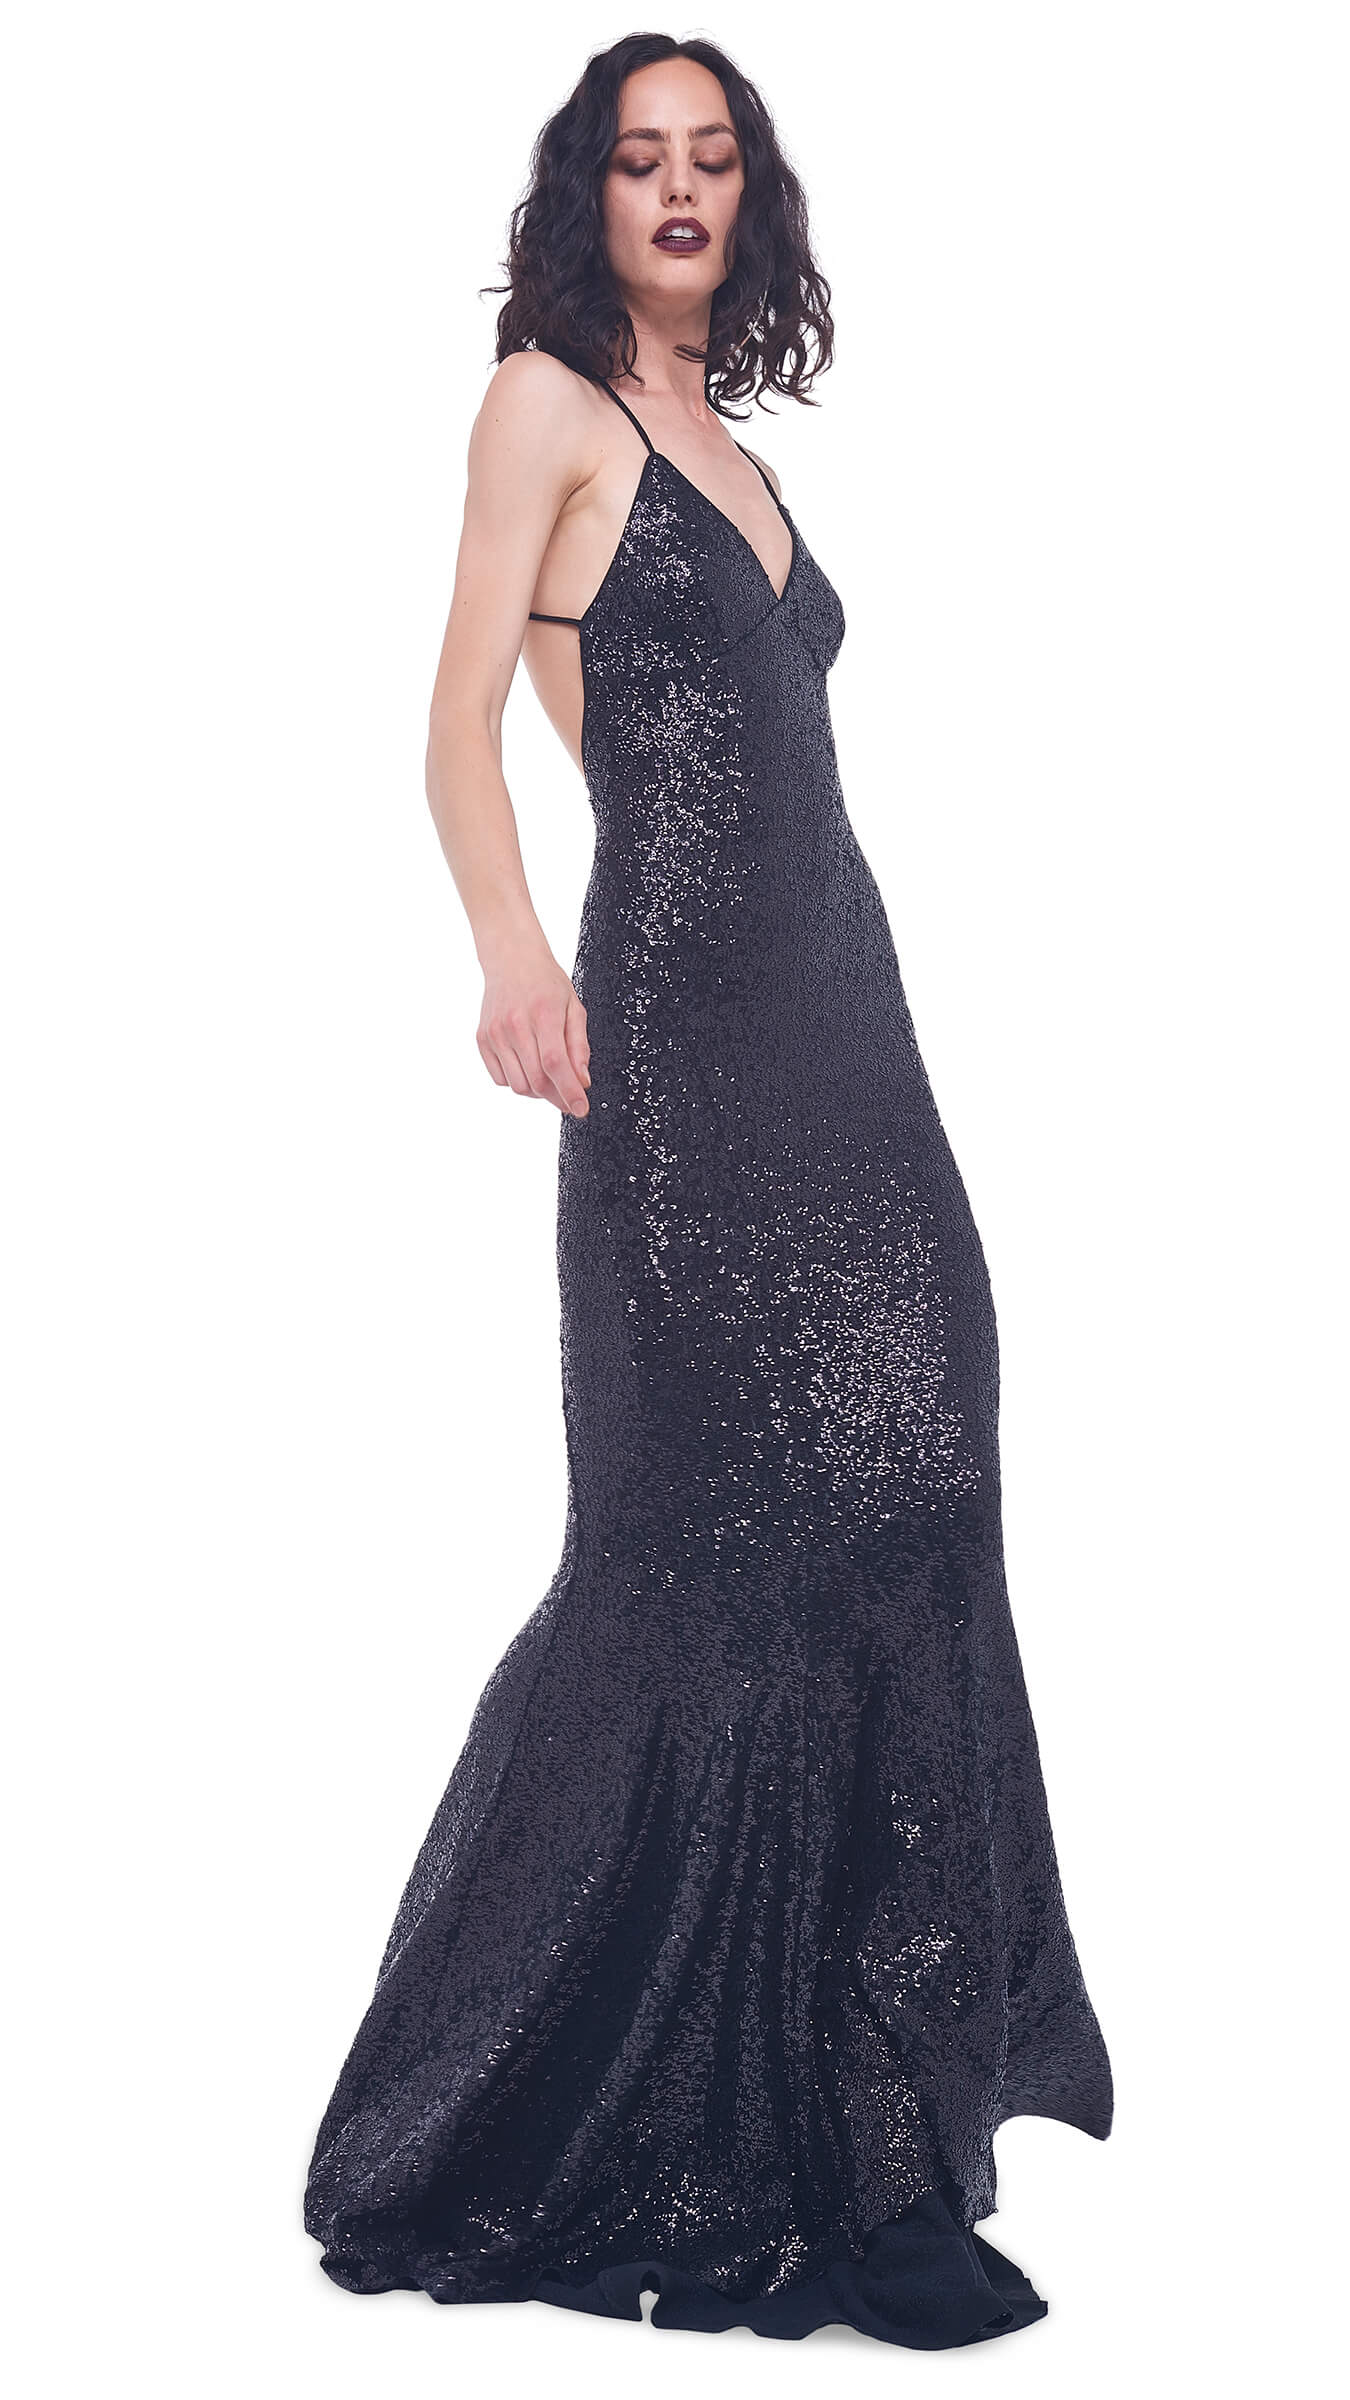 black sequin fishtail dress